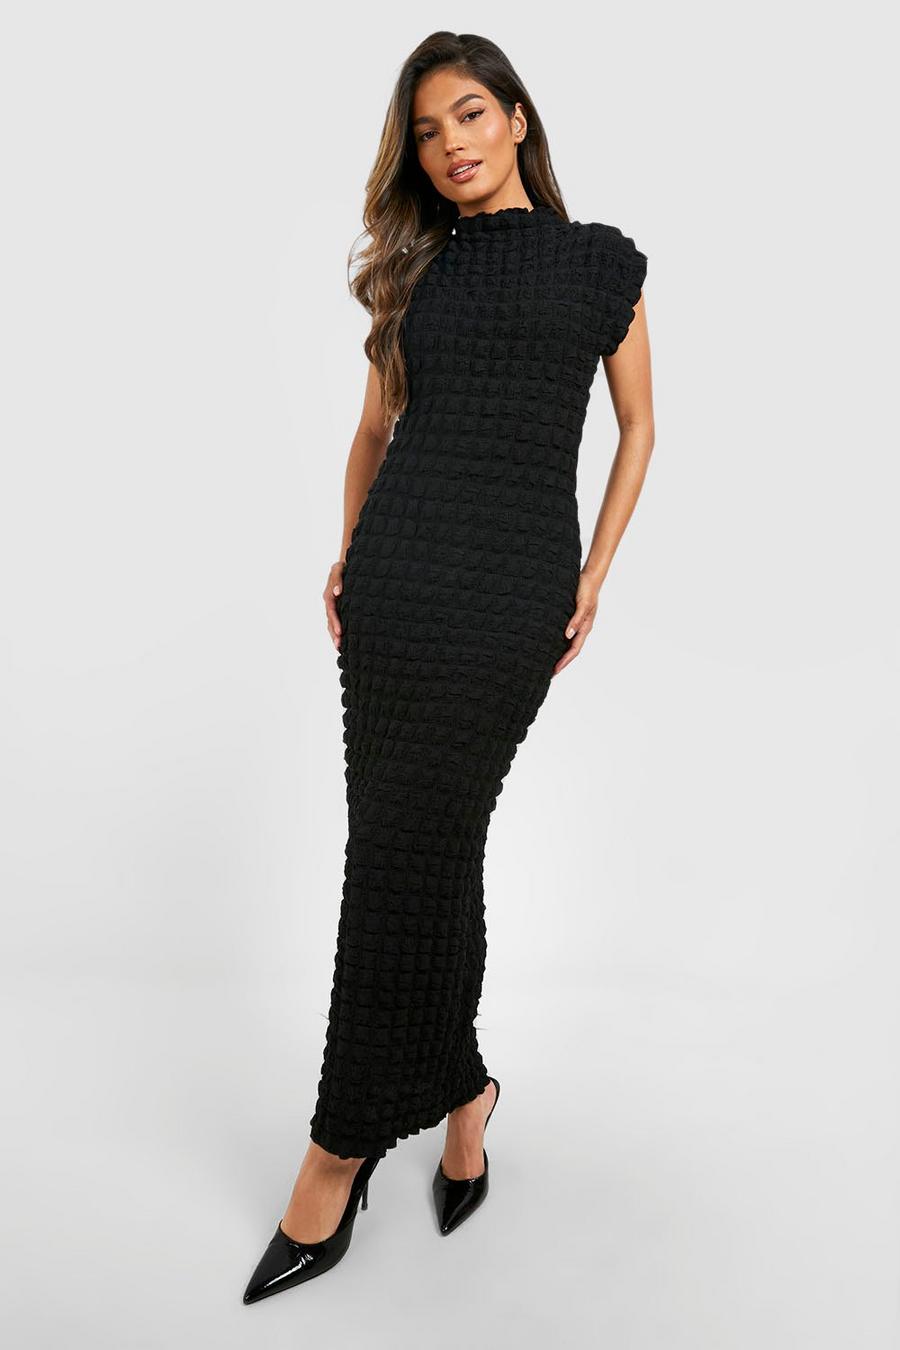 Black Bubble Textured Sleeveless Midaxi Dress